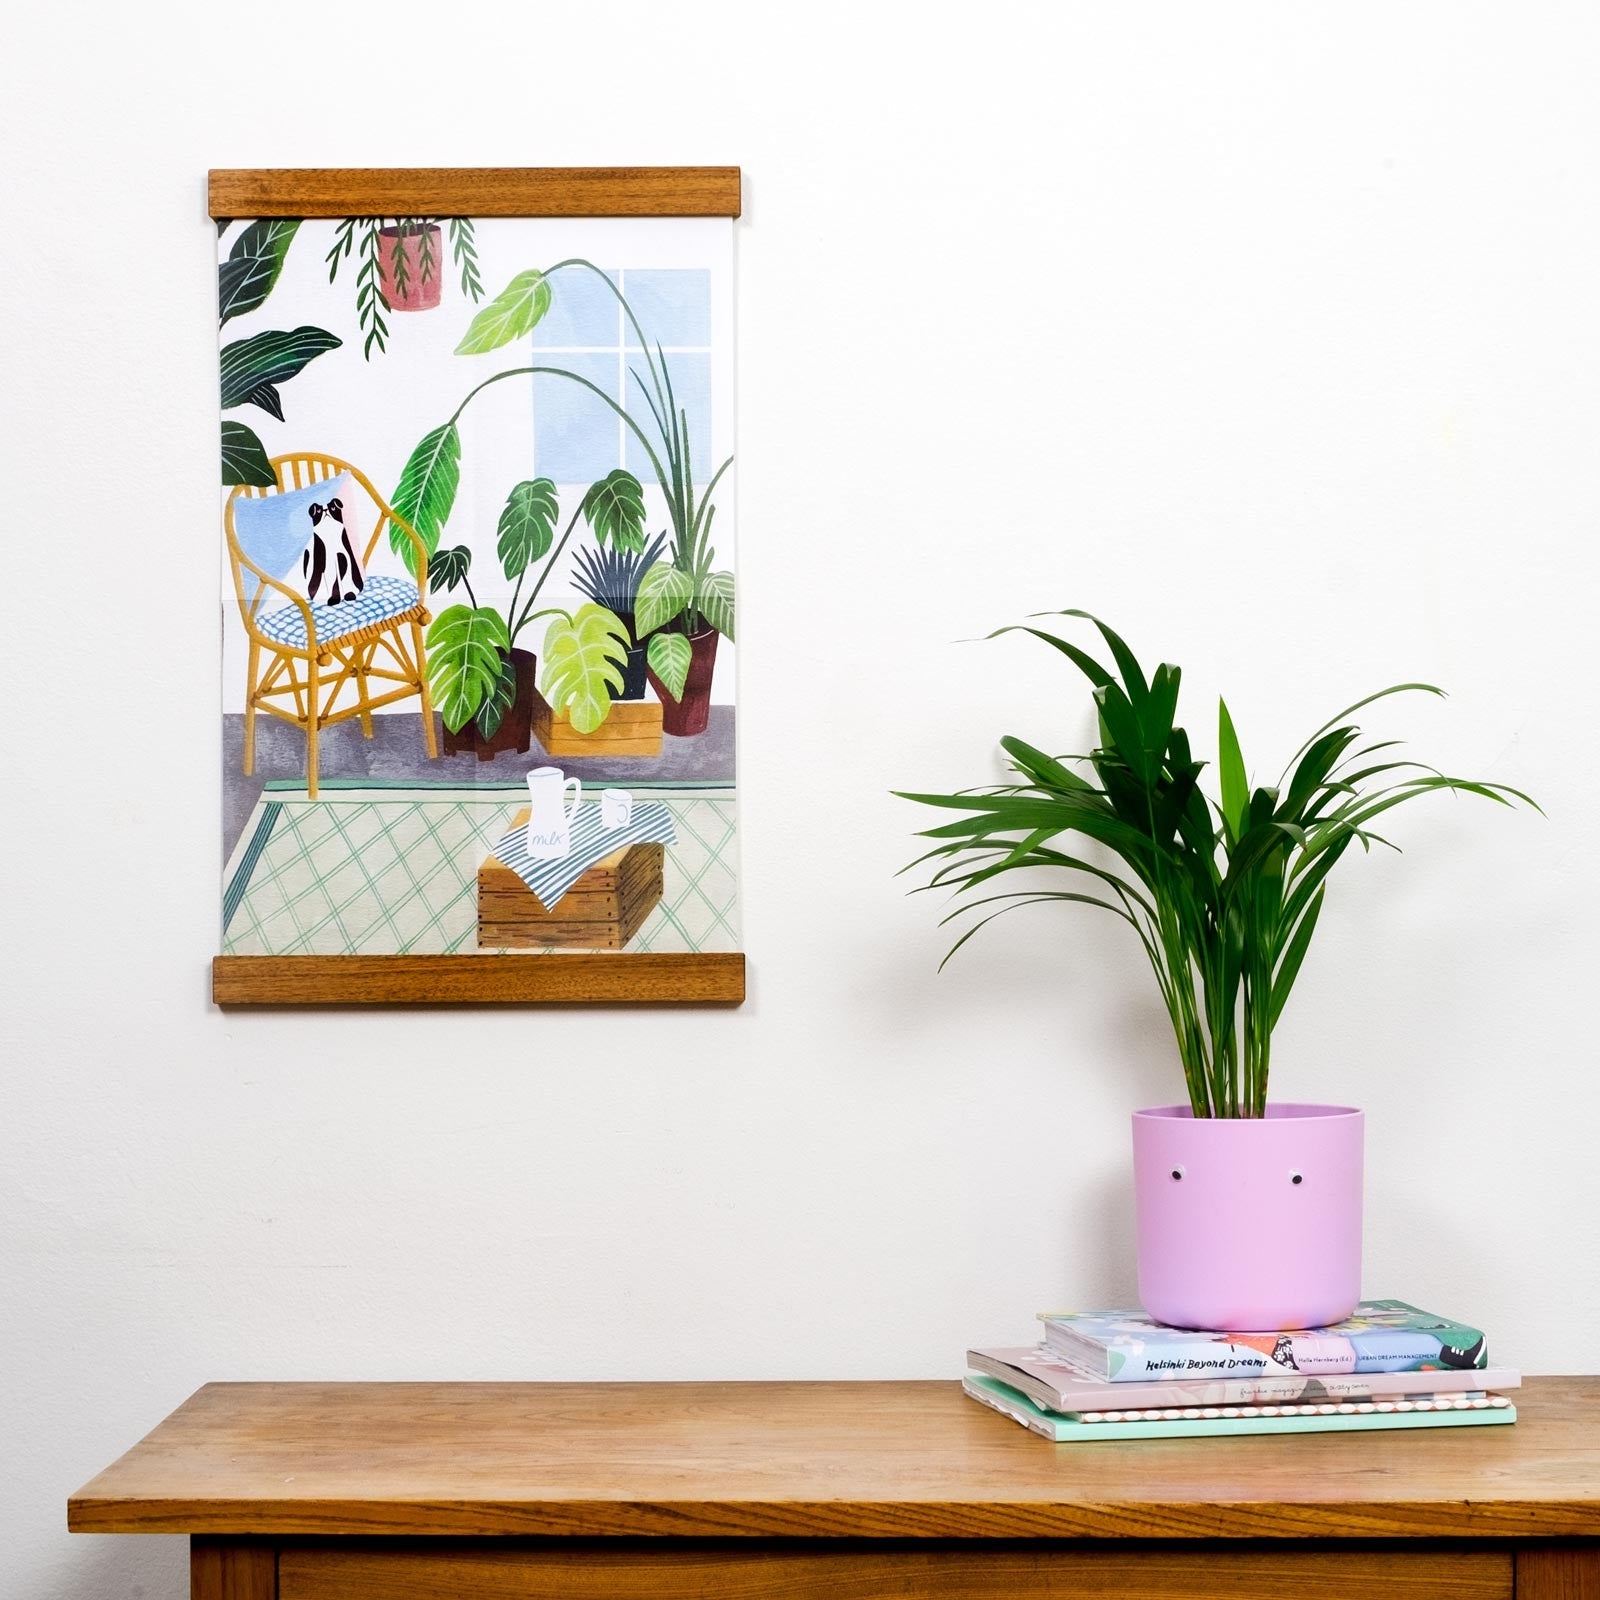 Easy to use handmade wooden poster hanger frames - Made of Sundays